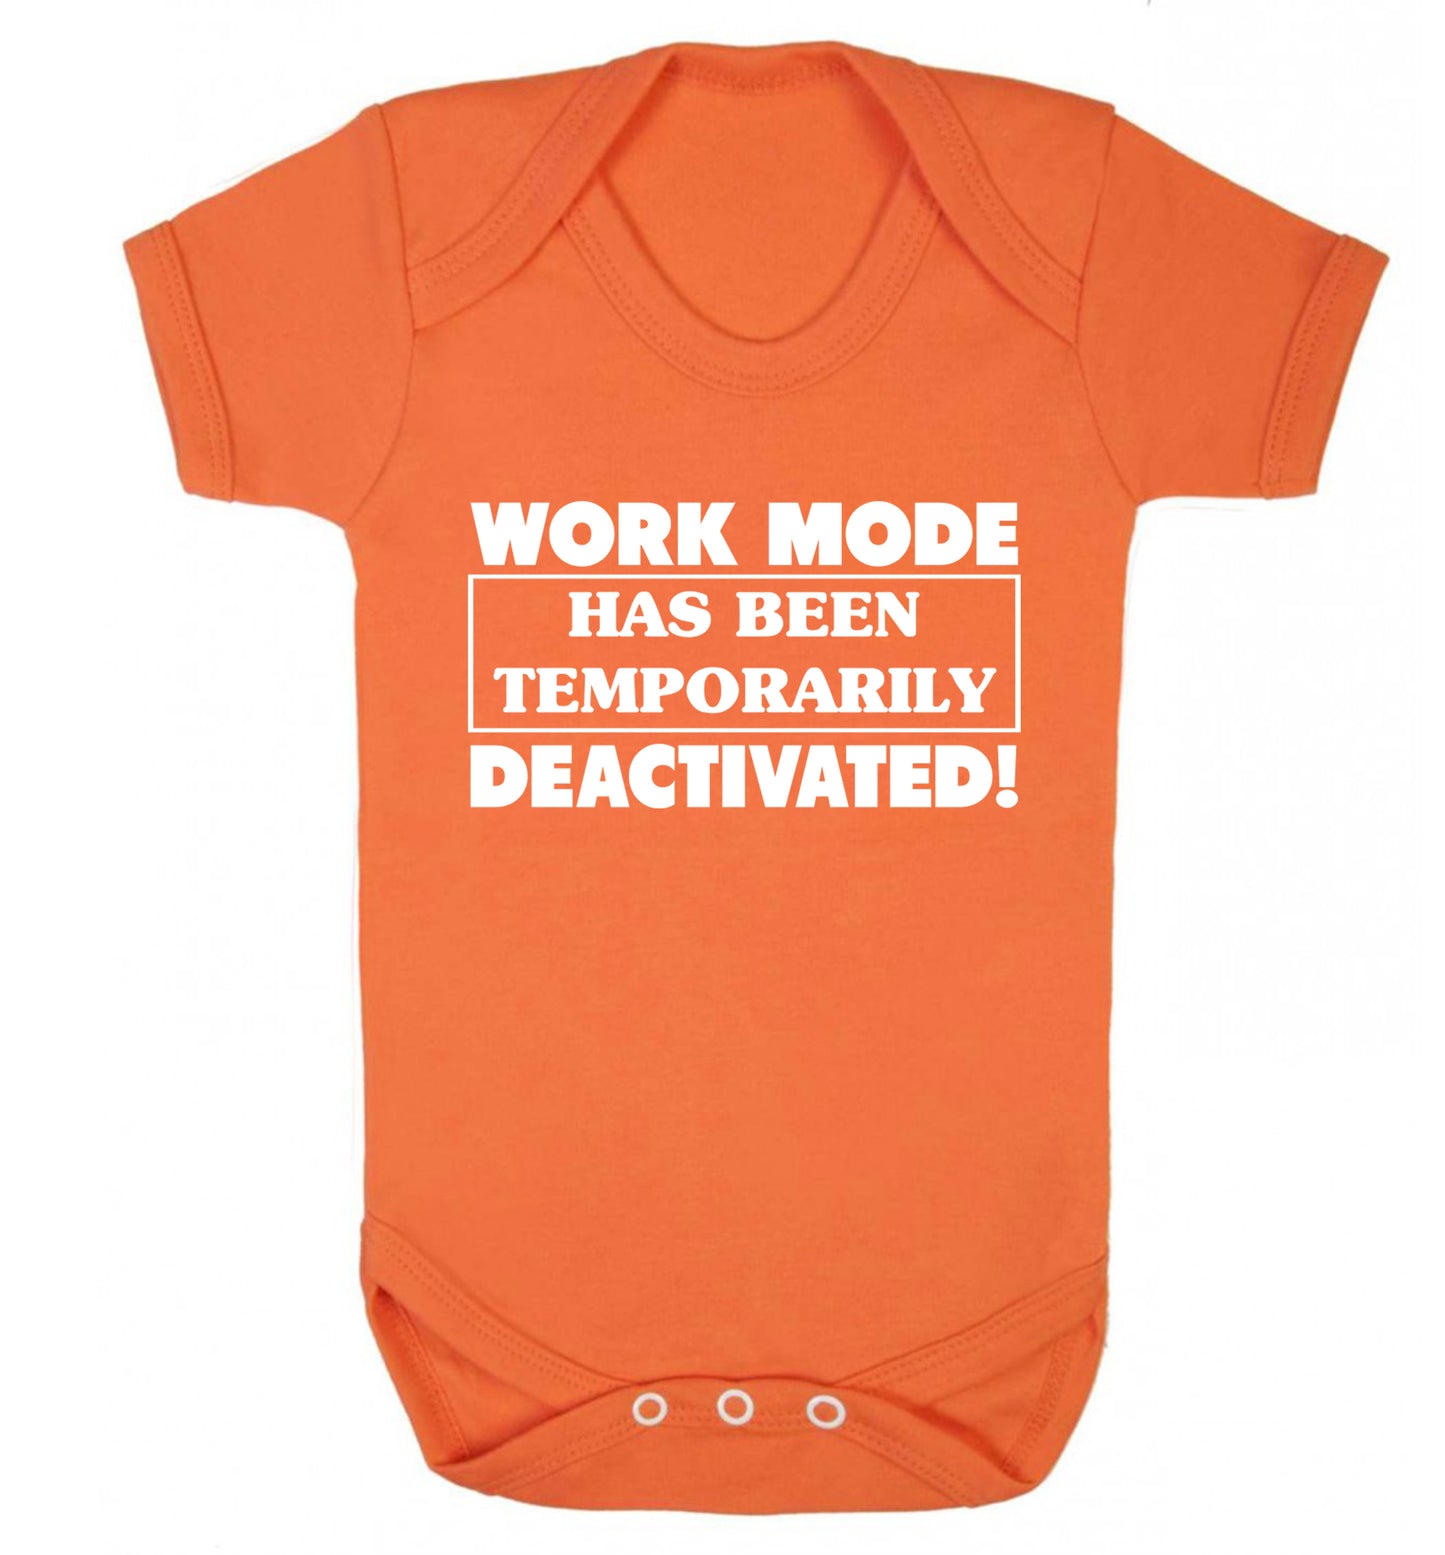 Work mode has now been temporarily deactivated Baby Vest orange 18-24 months